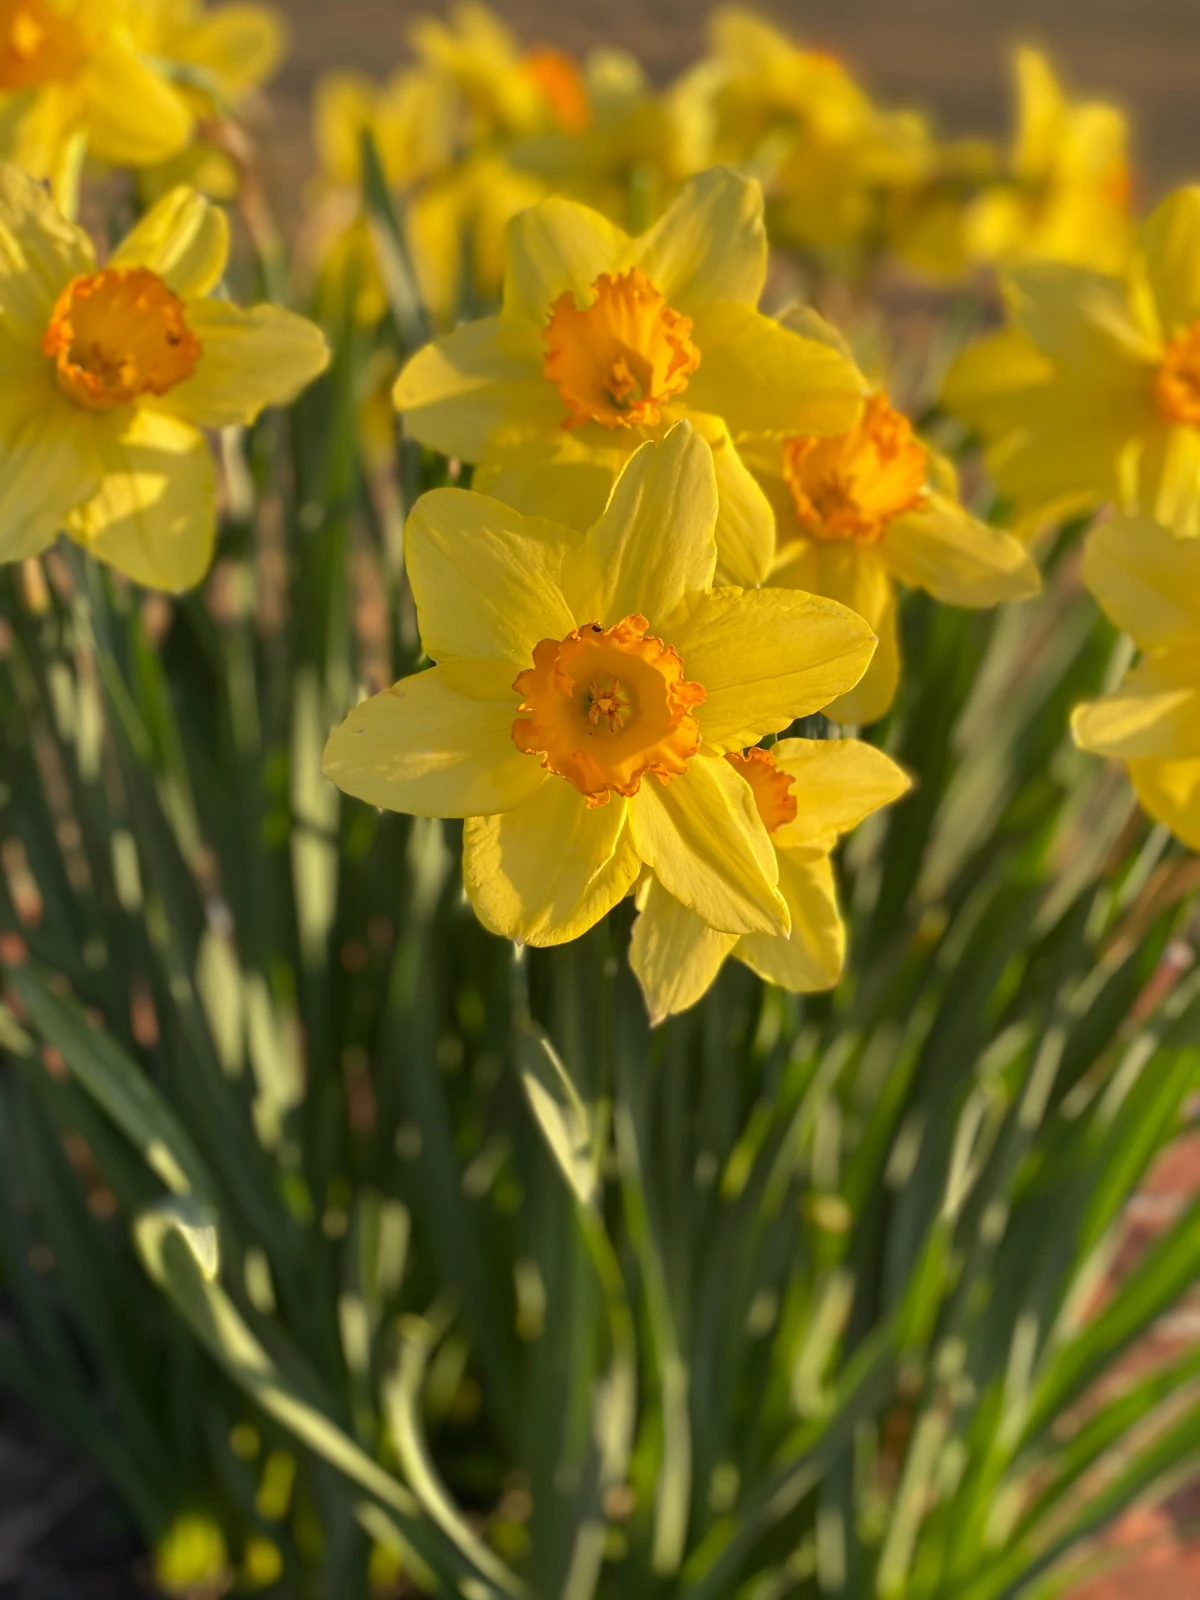 yellow and orange daffodils